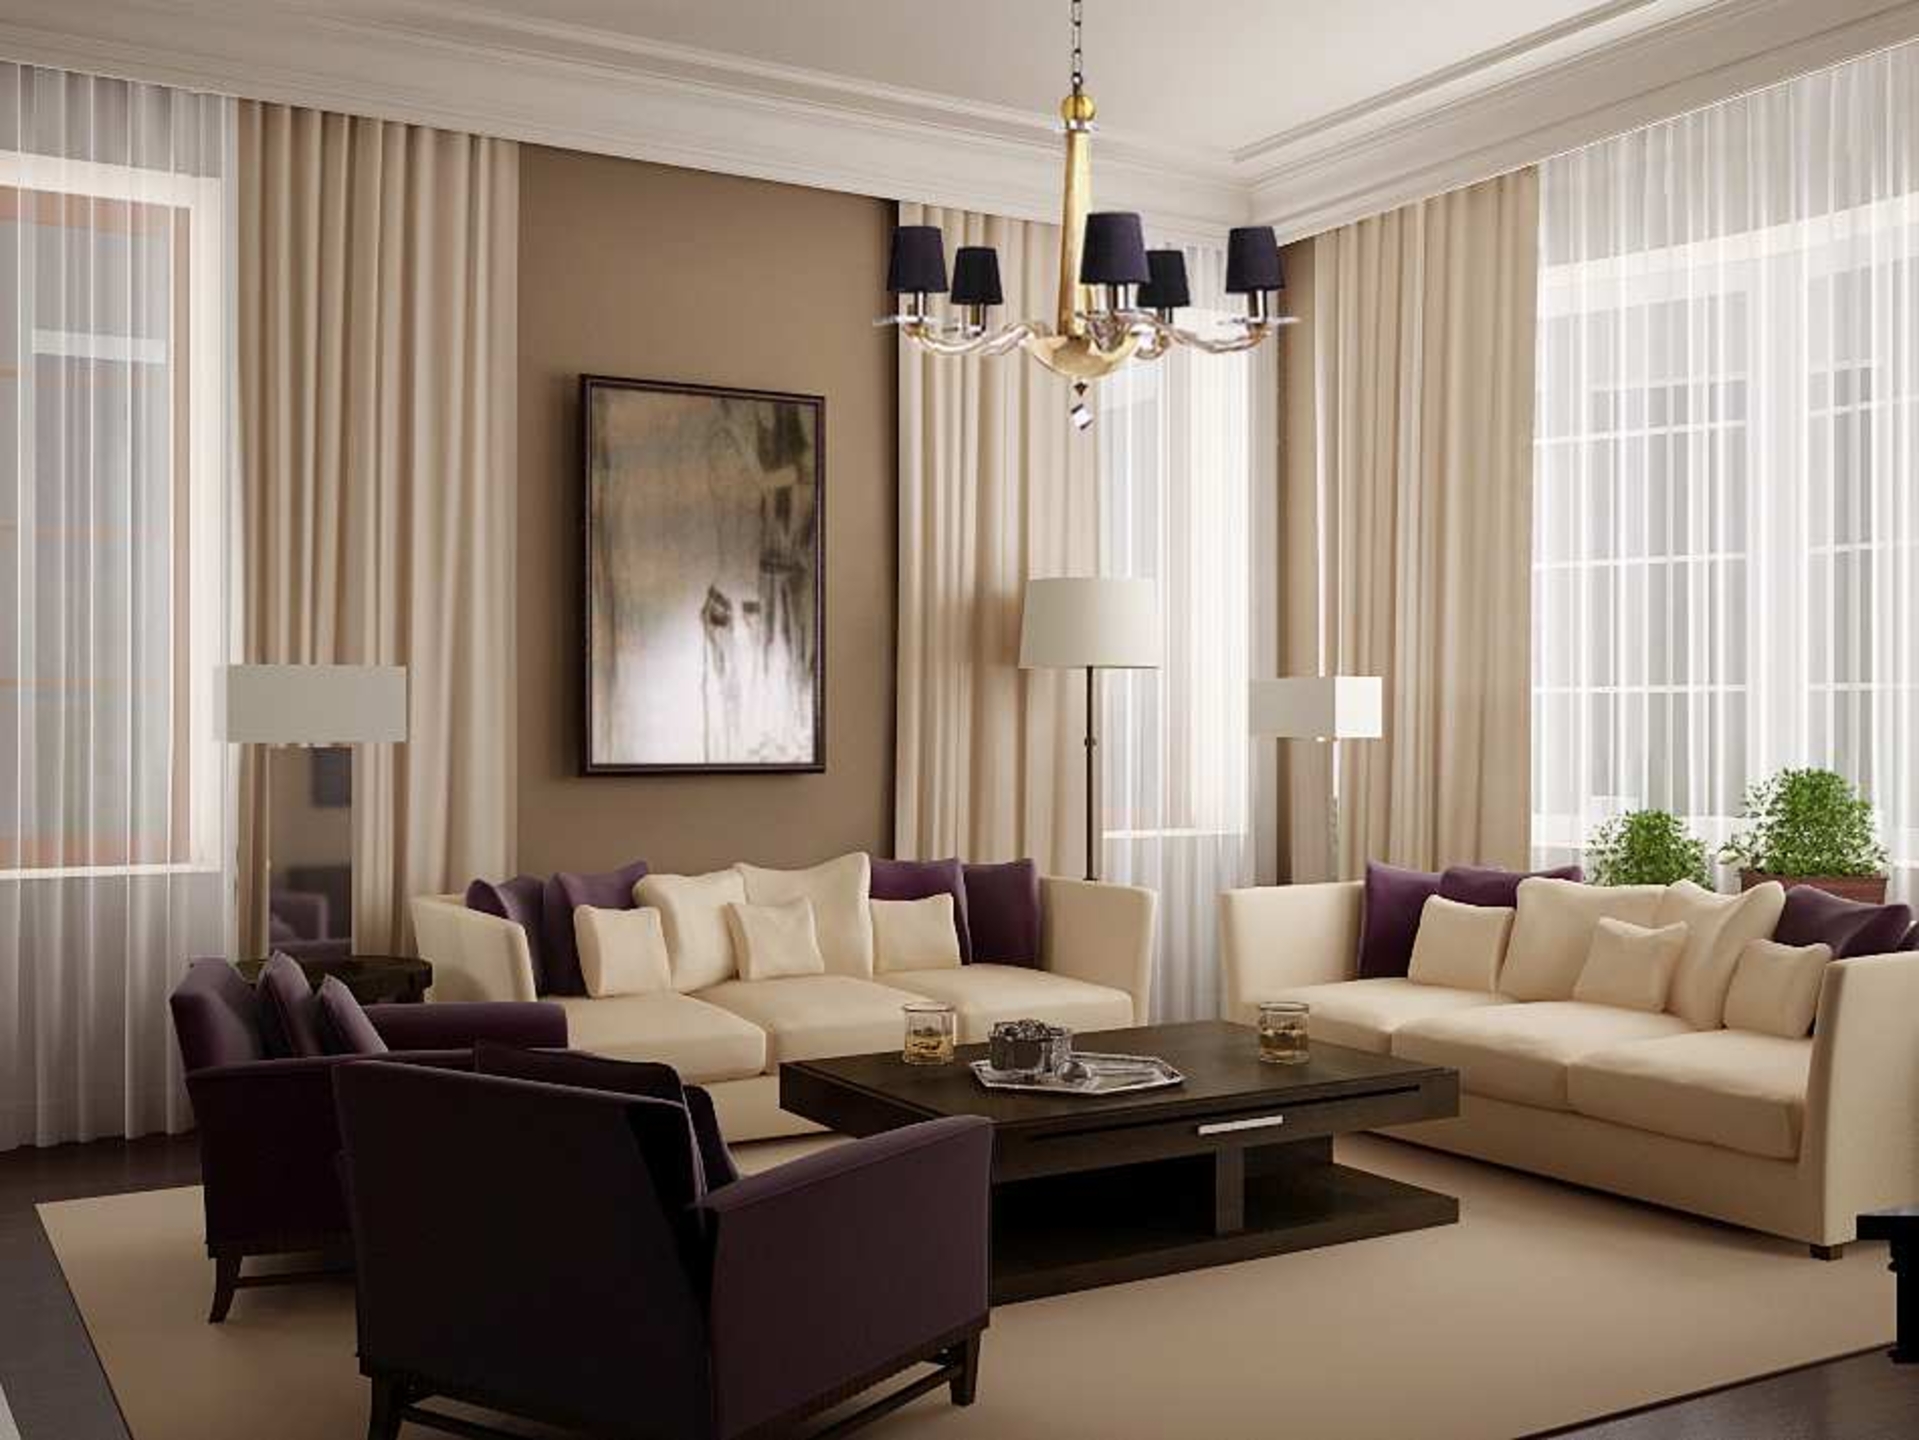 elegant living room designs modern rooms interior elegante decor color wallpaper paint wall sala small livingroom decorating fotolip colors brown